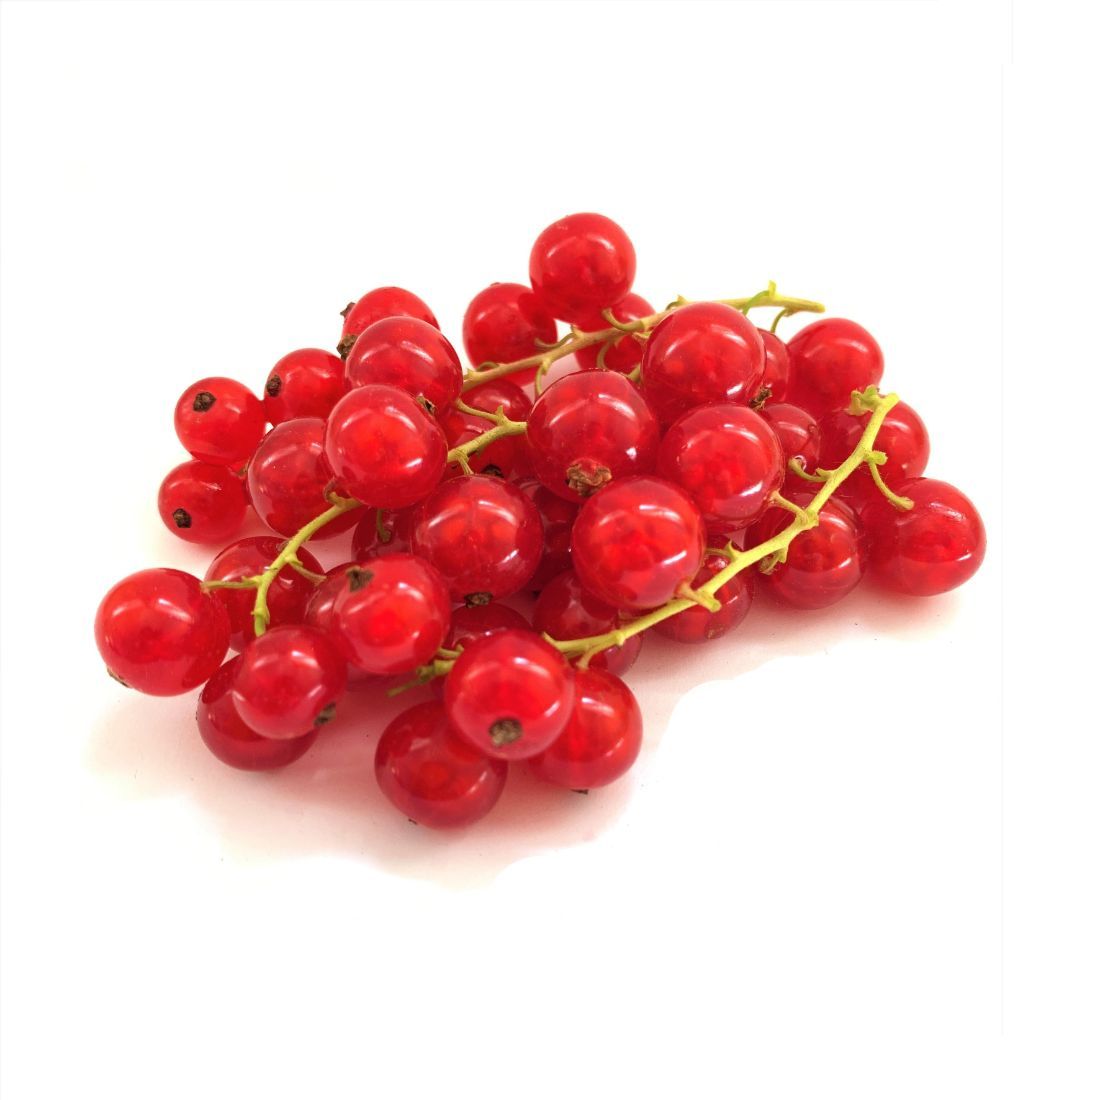 Buy Berries Red Current 1Pkt Online in Dubai, Sharjah, Abu Dhabi